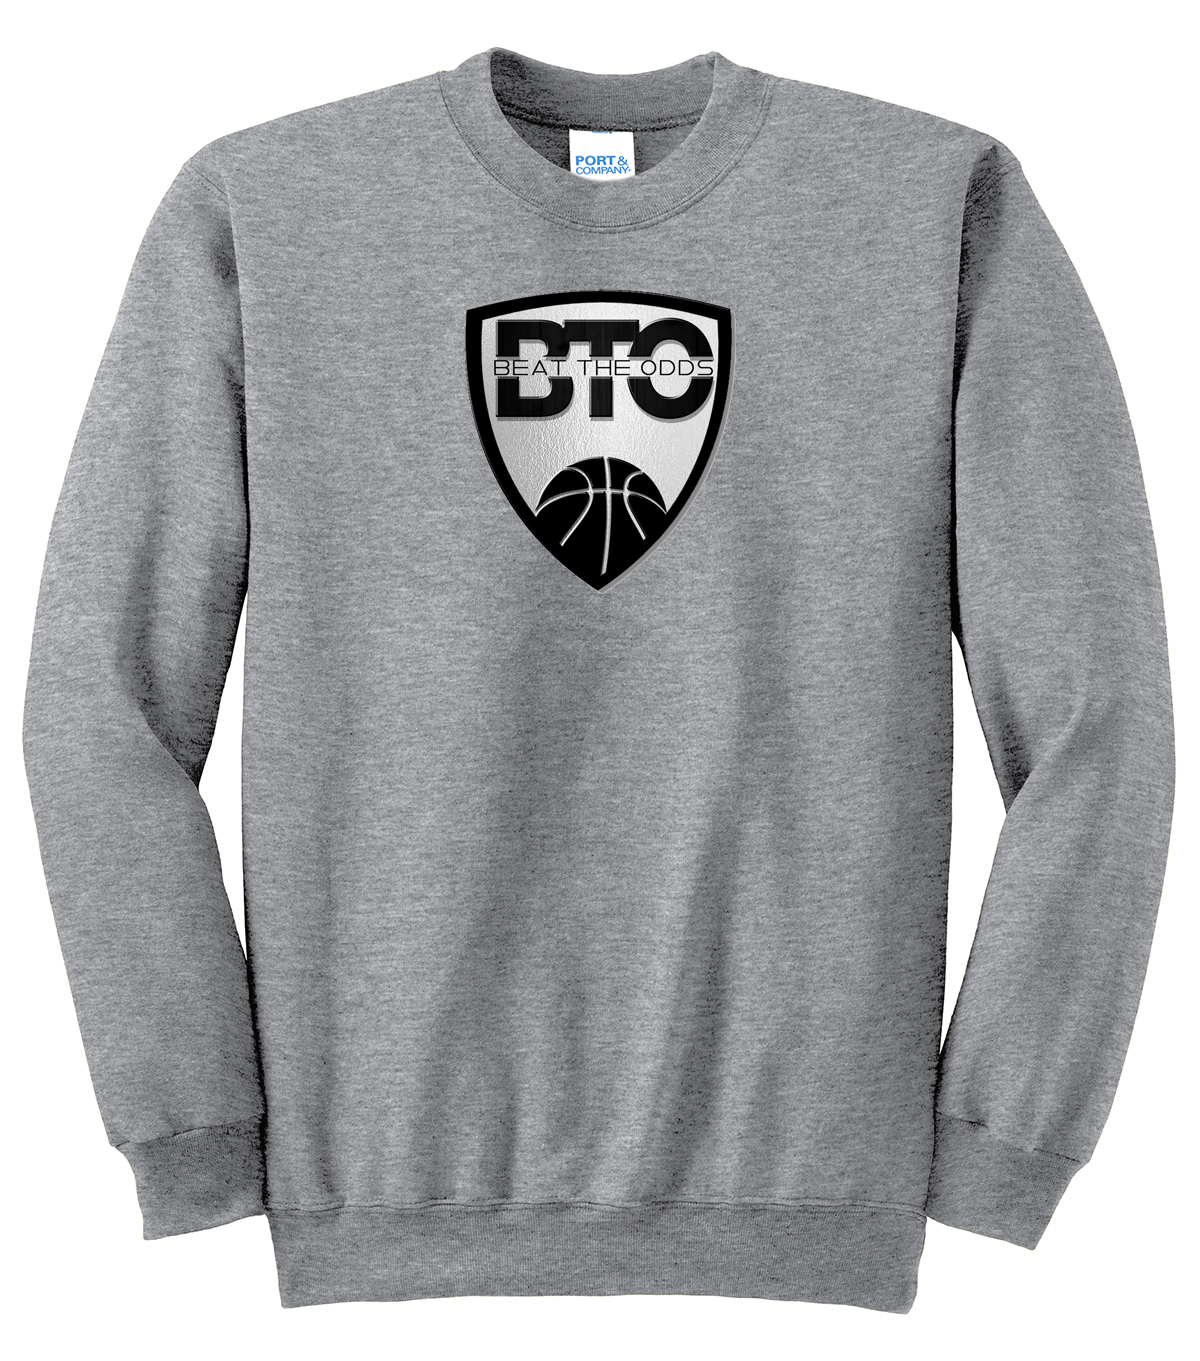 BTO Basketball Crew Neck Sweater